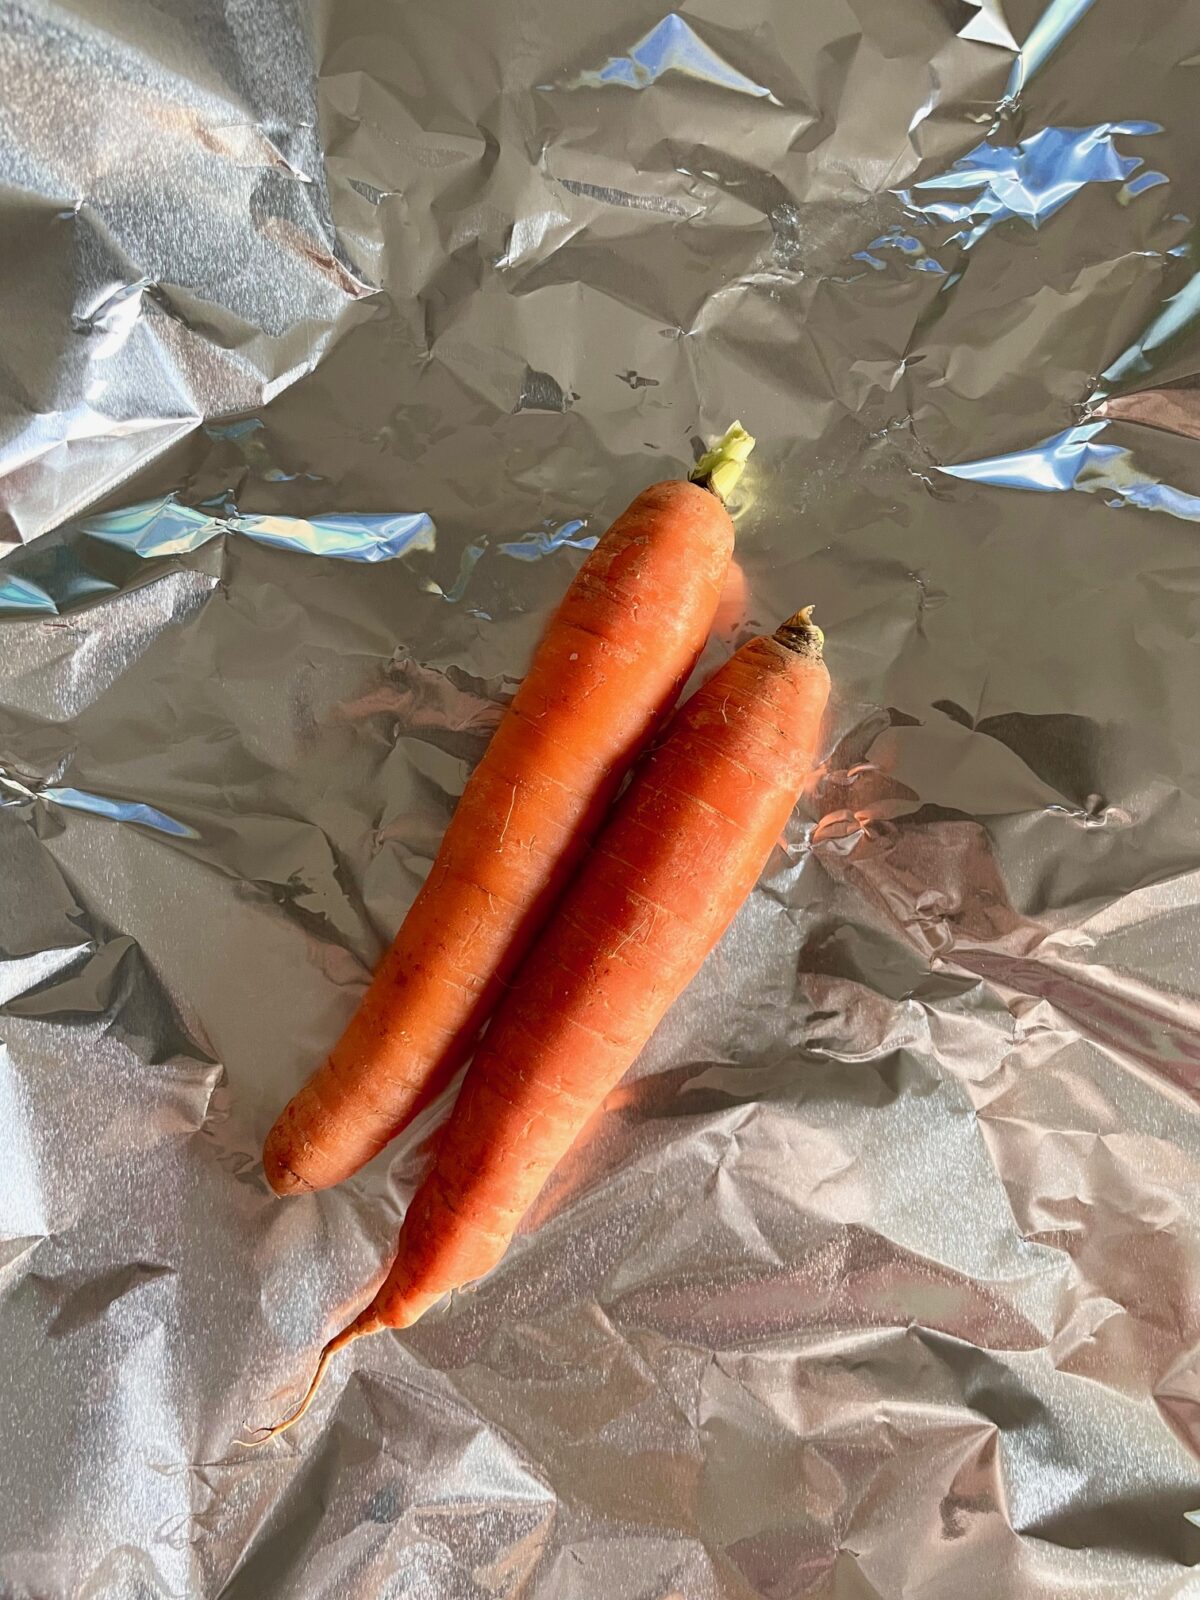 Two orange carrots on aluminum foil.